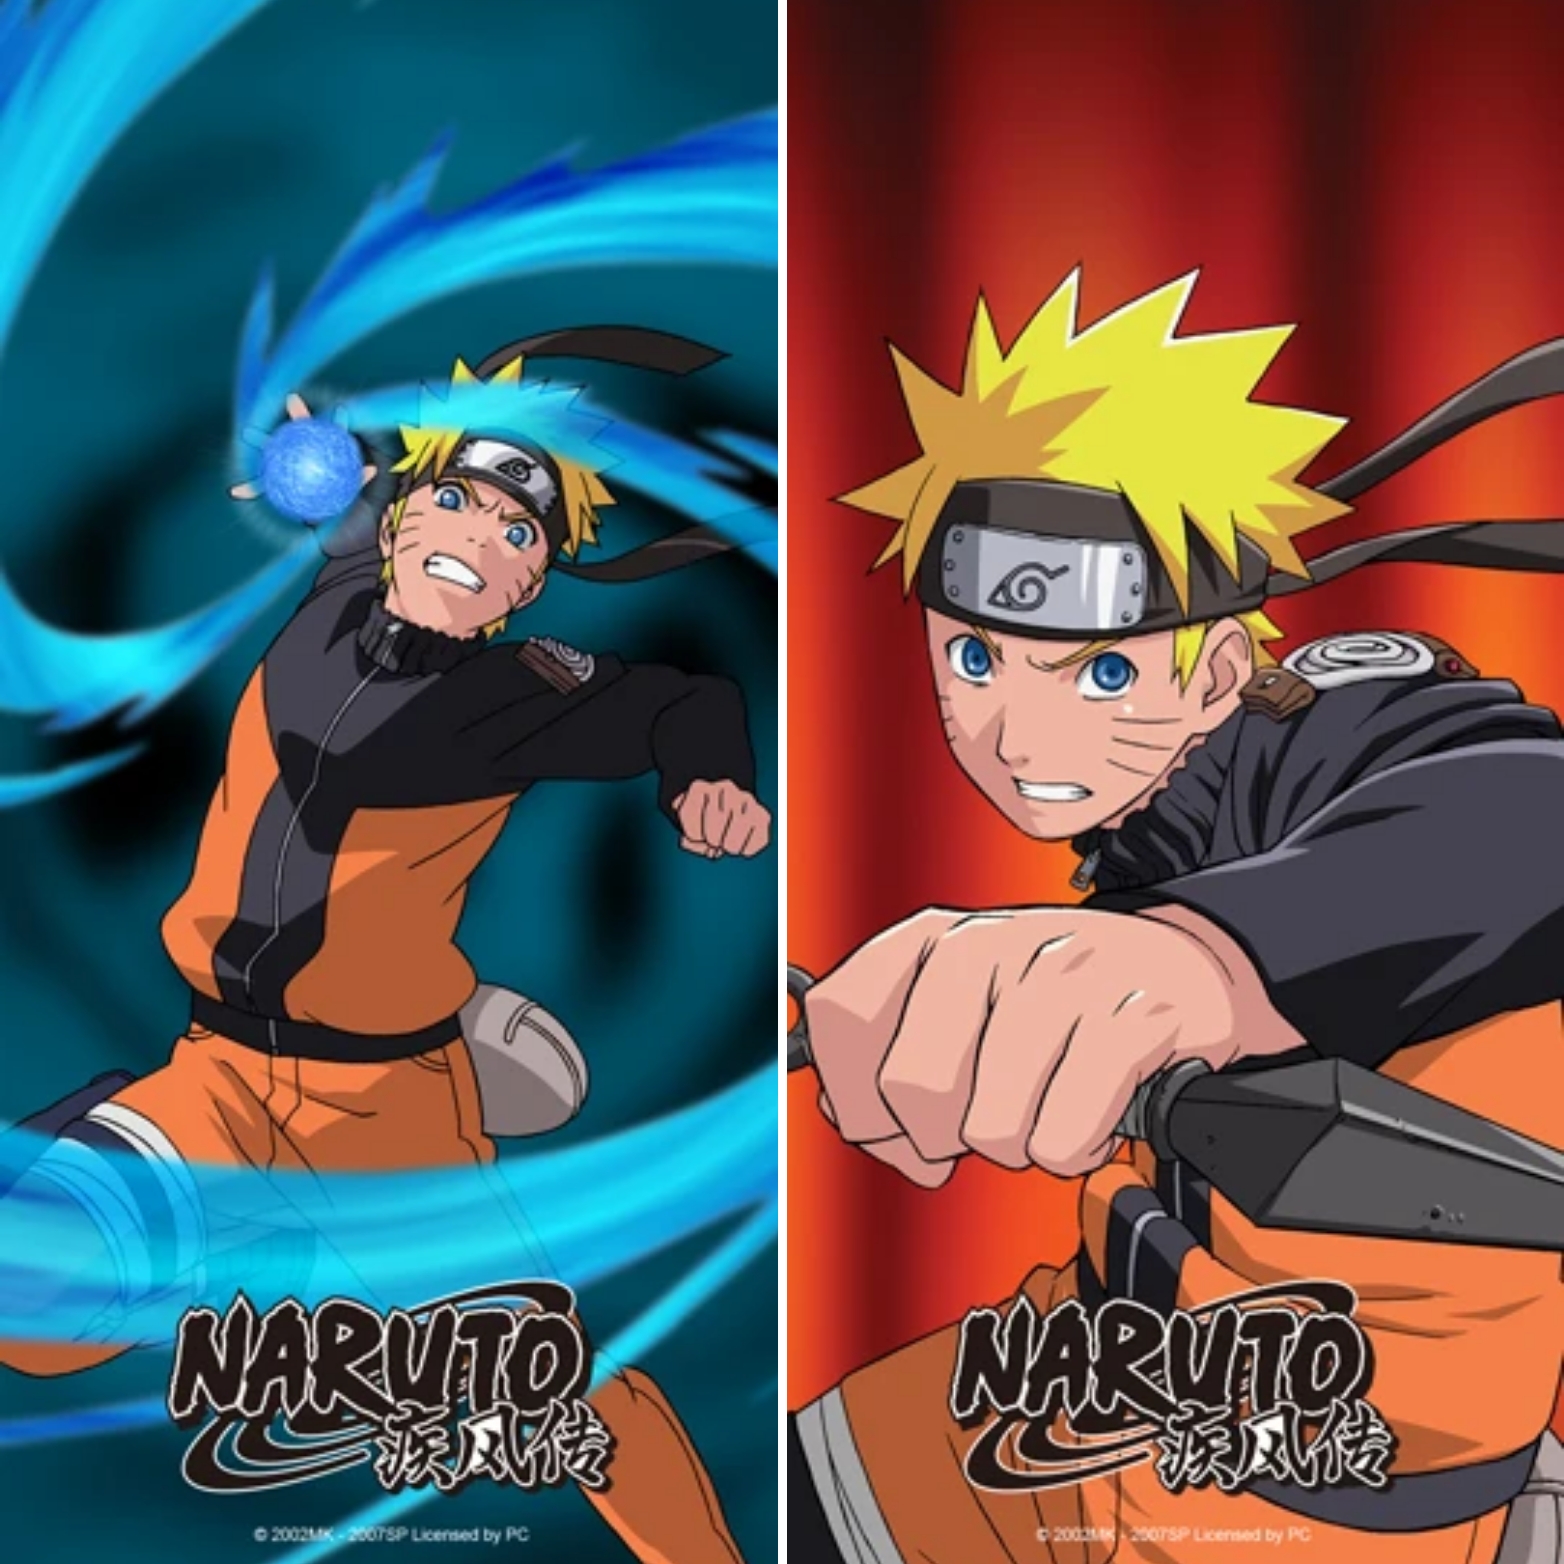 Realme GT Neo 3 Naruto Edition Wallpapers